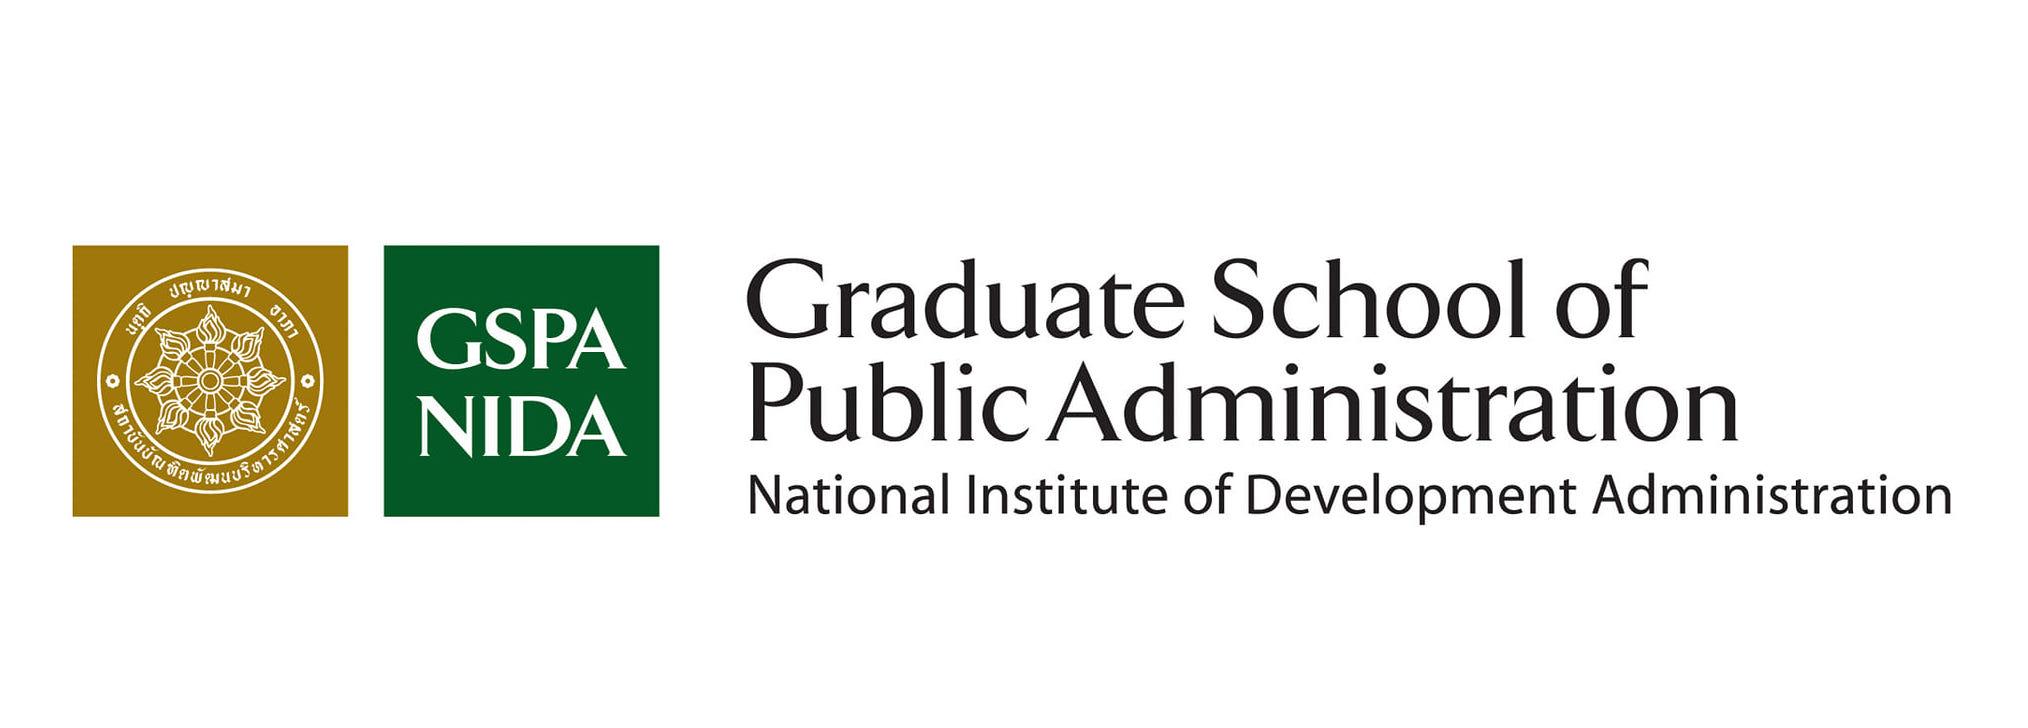 Graduate School of Public Administration, NIDA- National Institute of Development Administration